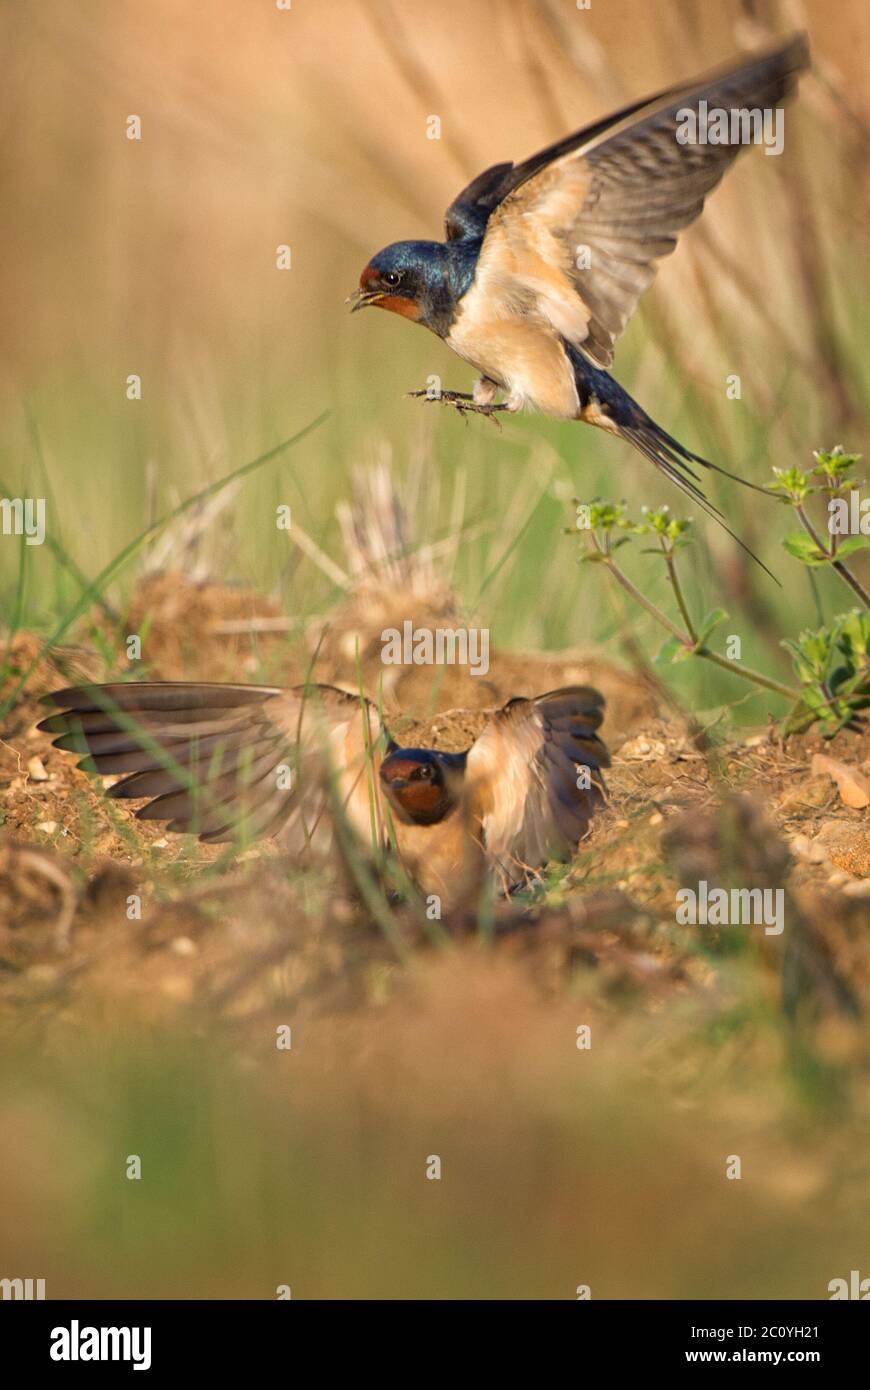 Scheune Swallow - Hirundo rustica, schöner beliebter Barschvogel aus Europa, Insel Pag, Kroatien. Stockfoto